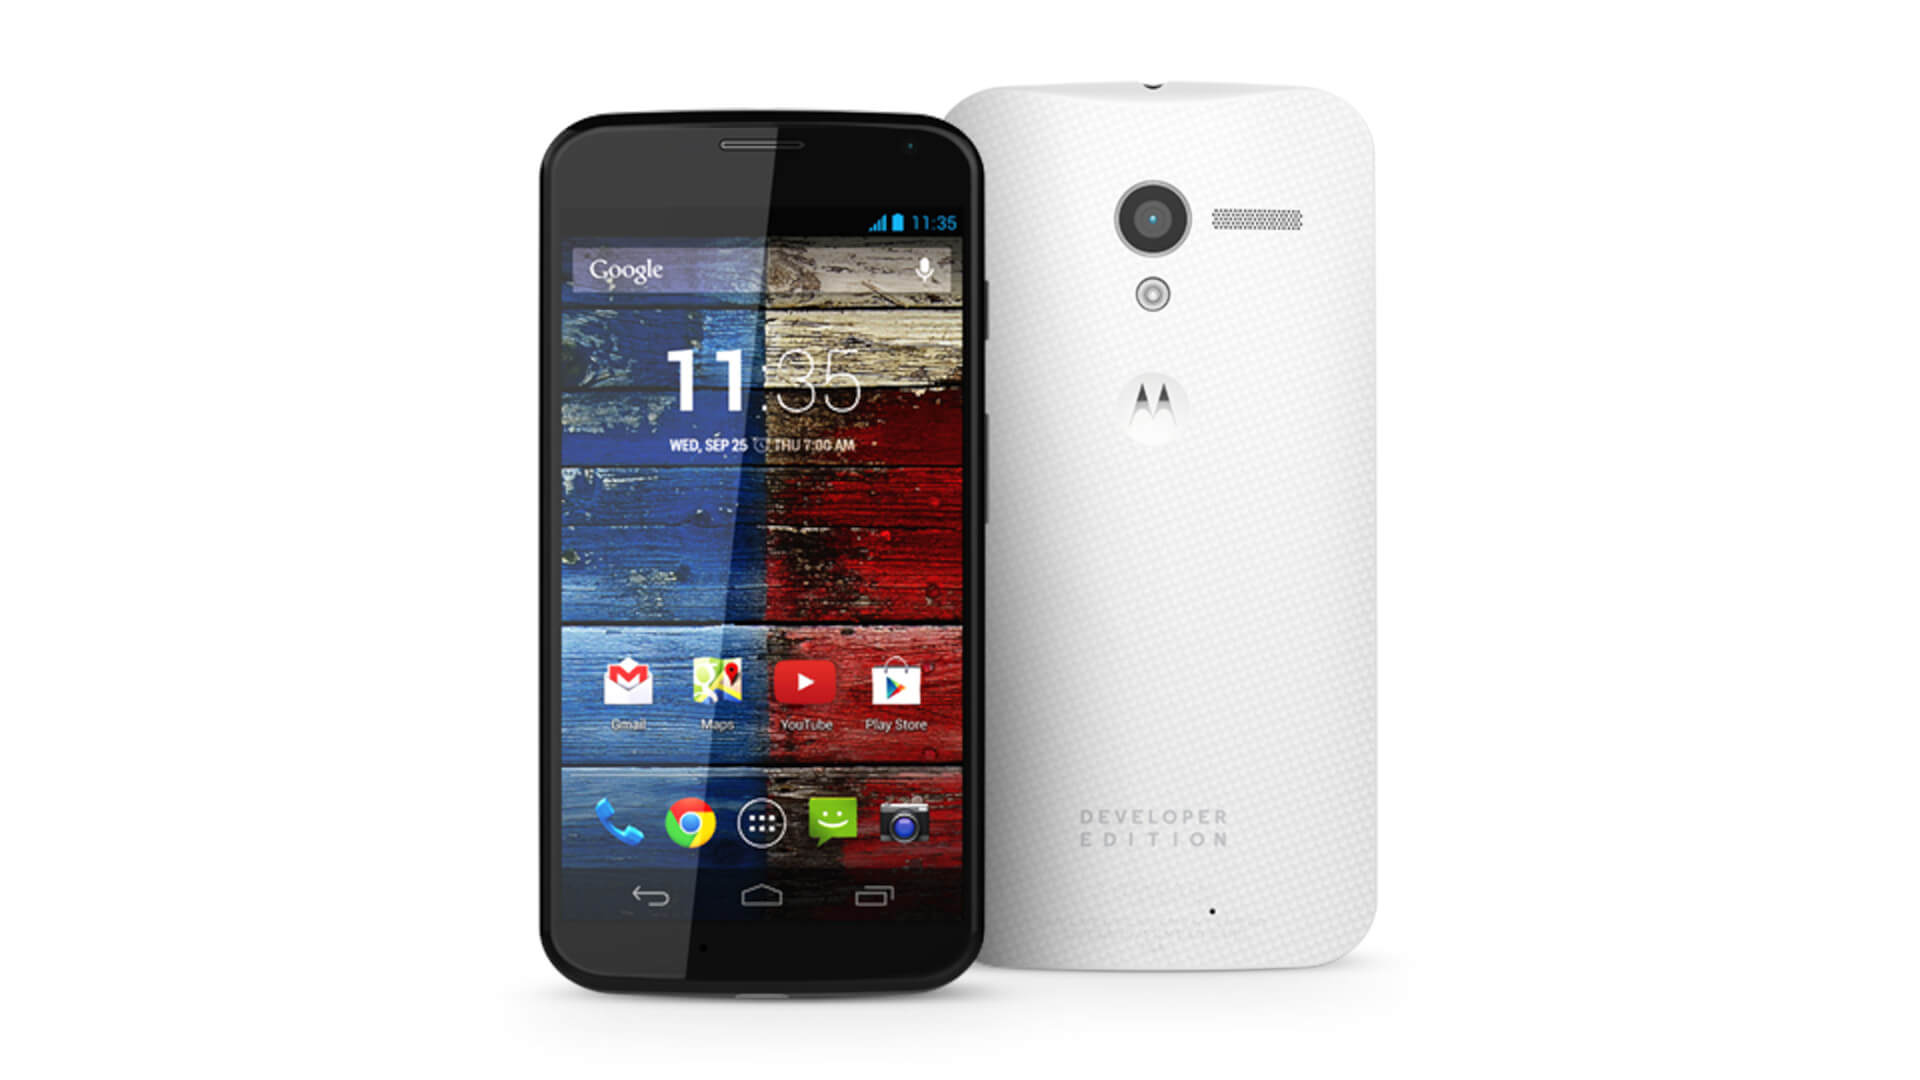 The Motorola Moto X Developer Edition against a white background